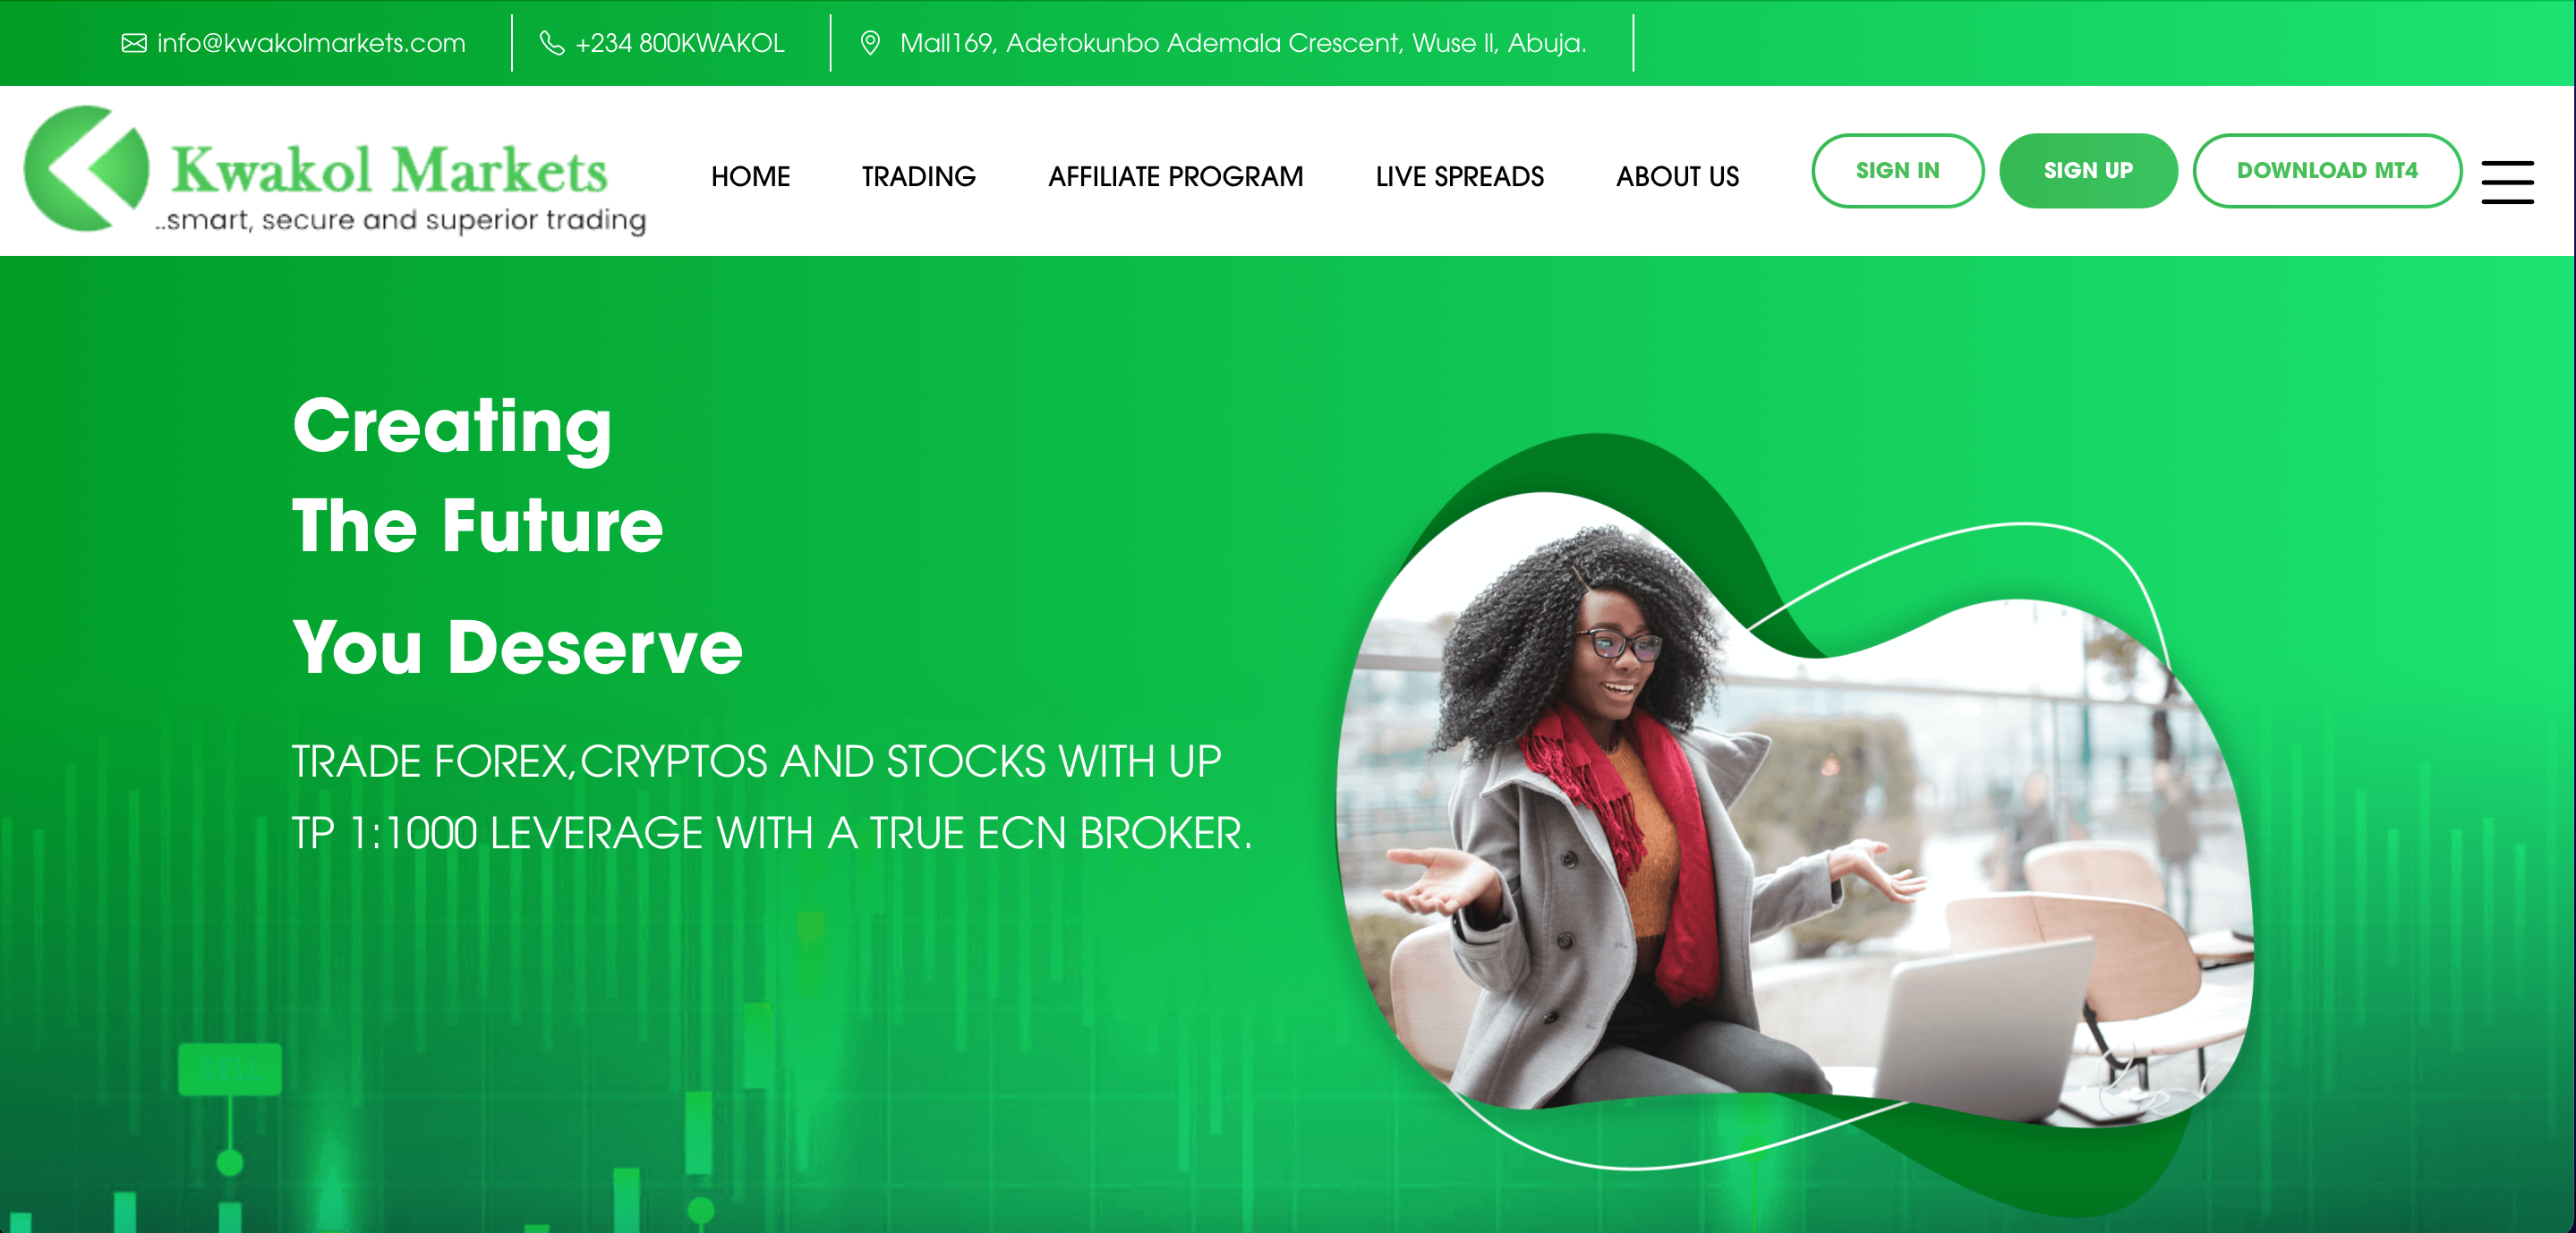 Kwakol Markets website